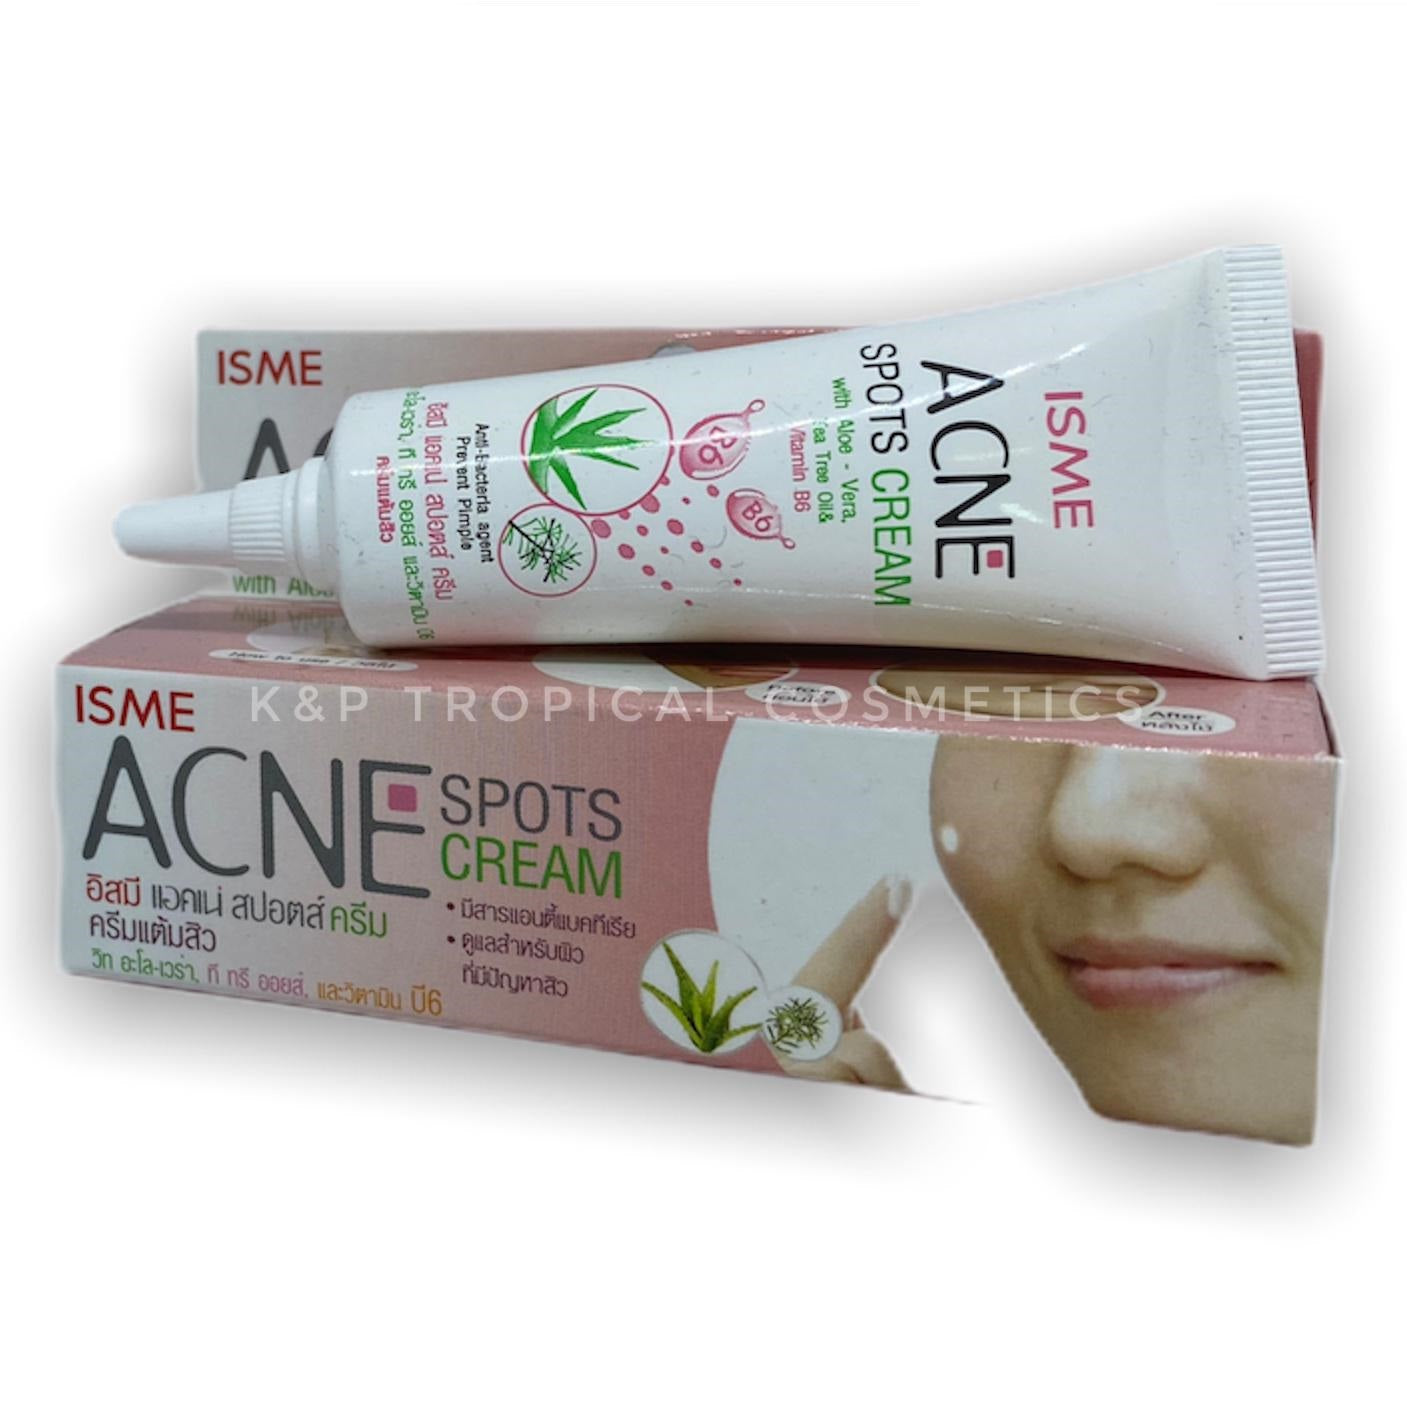 ISME Acne Spot Cream With Aloe Vera Tea Tree Oil Vitamine B6 10 g., Крем от акне c Алоэ, маслом чайного дерева и витамином B6 10 гр.